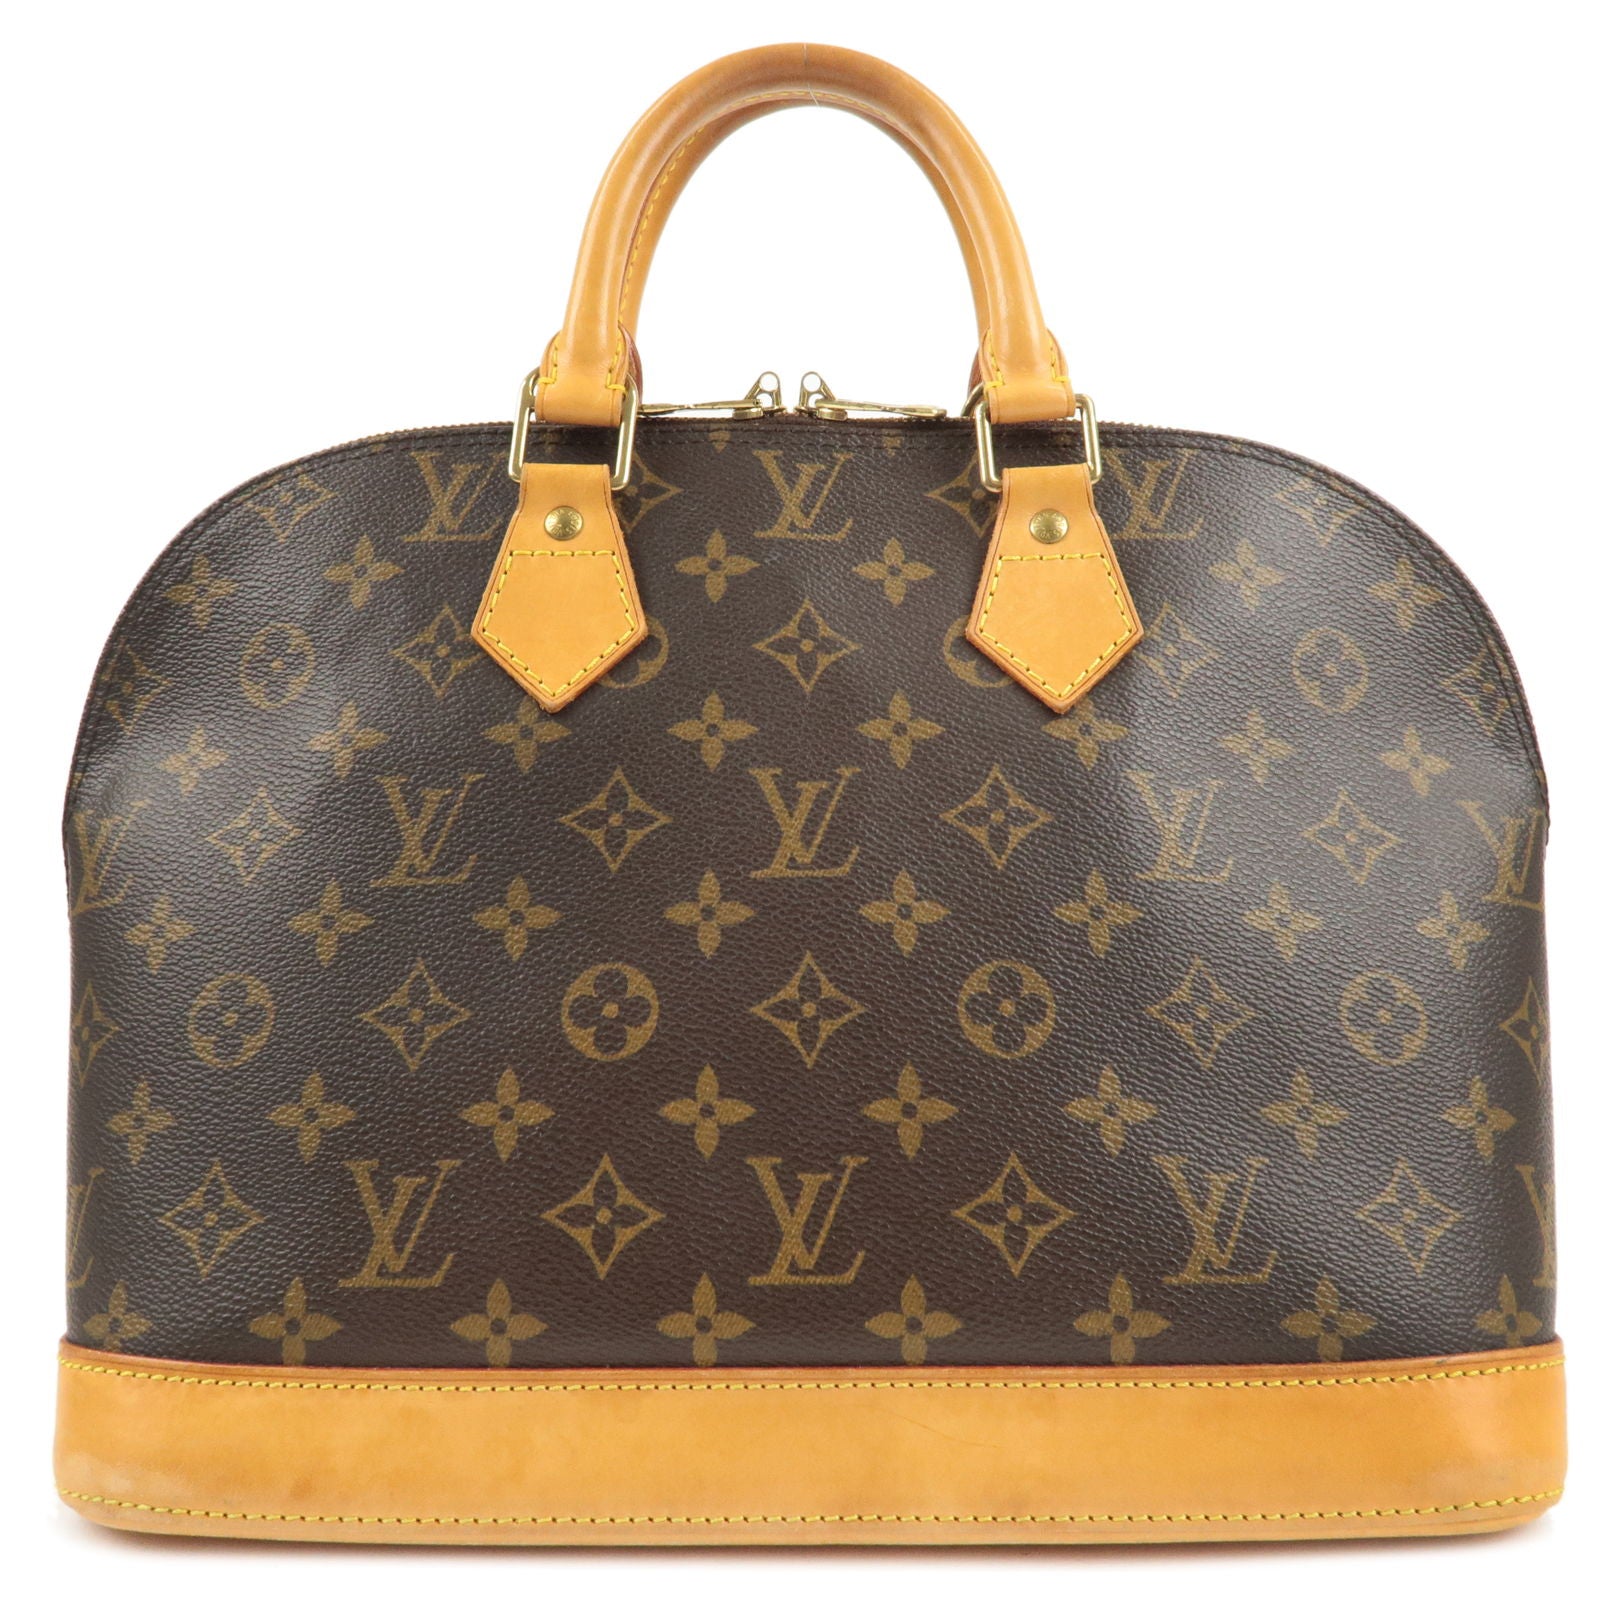 Louis Vuitton Alma Shoulder Bag BB Red Leather Monogram Vernis + Charm  Chain!!